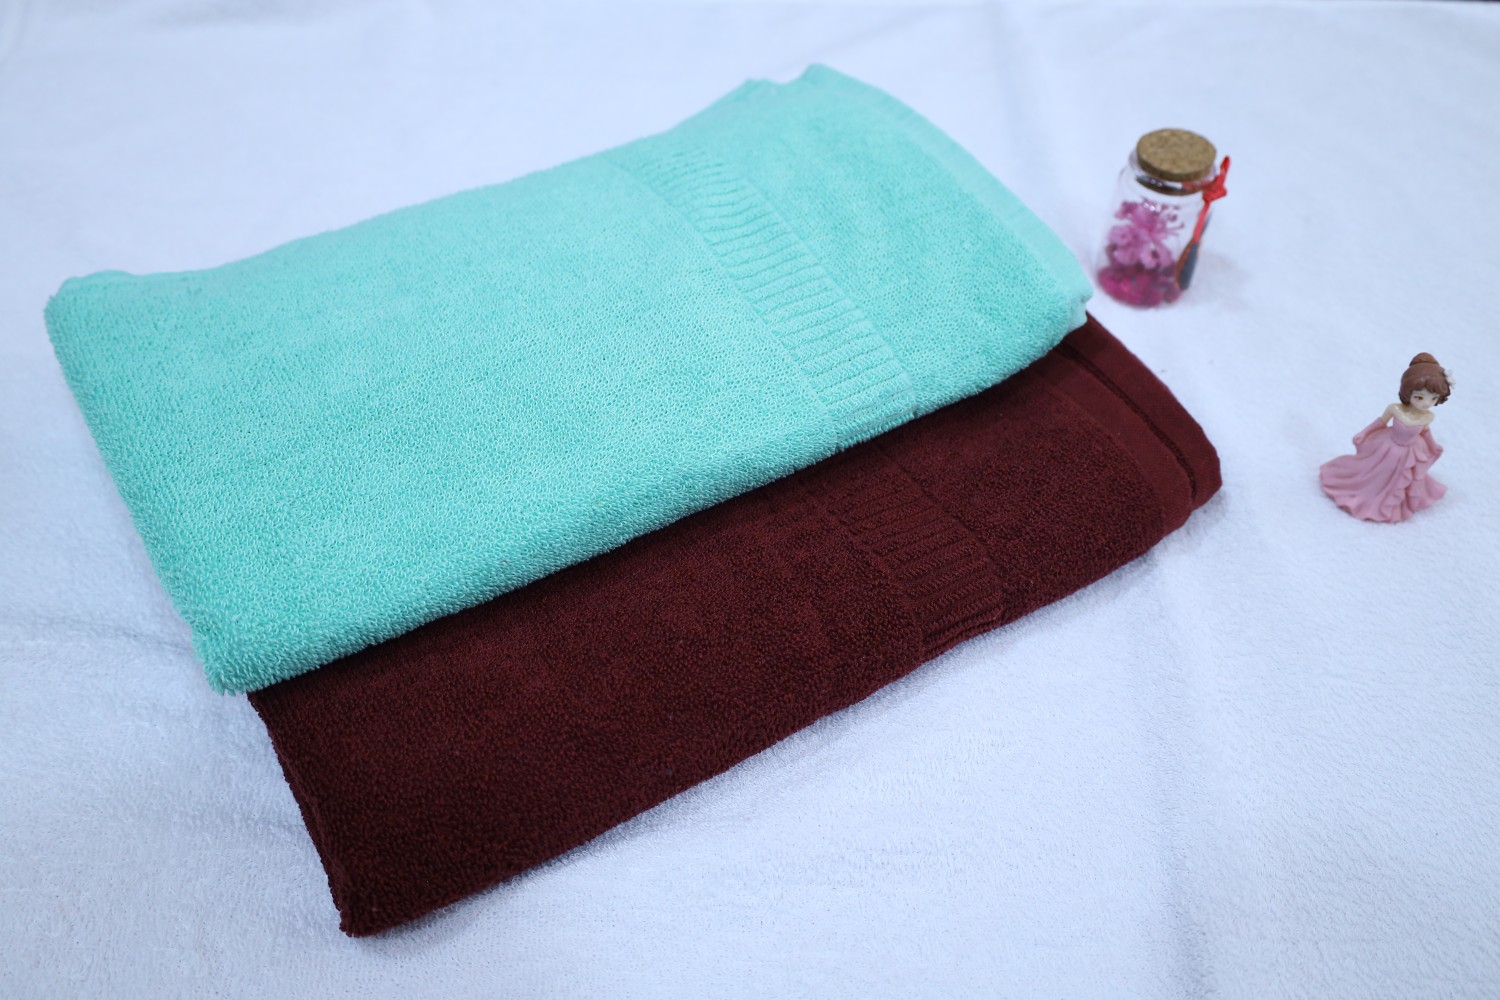 Taurusent Super Soft 100% Cotton High Absorbing Turkey Bath Towel, Size: 30x60 inches (450 GSM) - Pack of 2 (Aqua & Maroon)